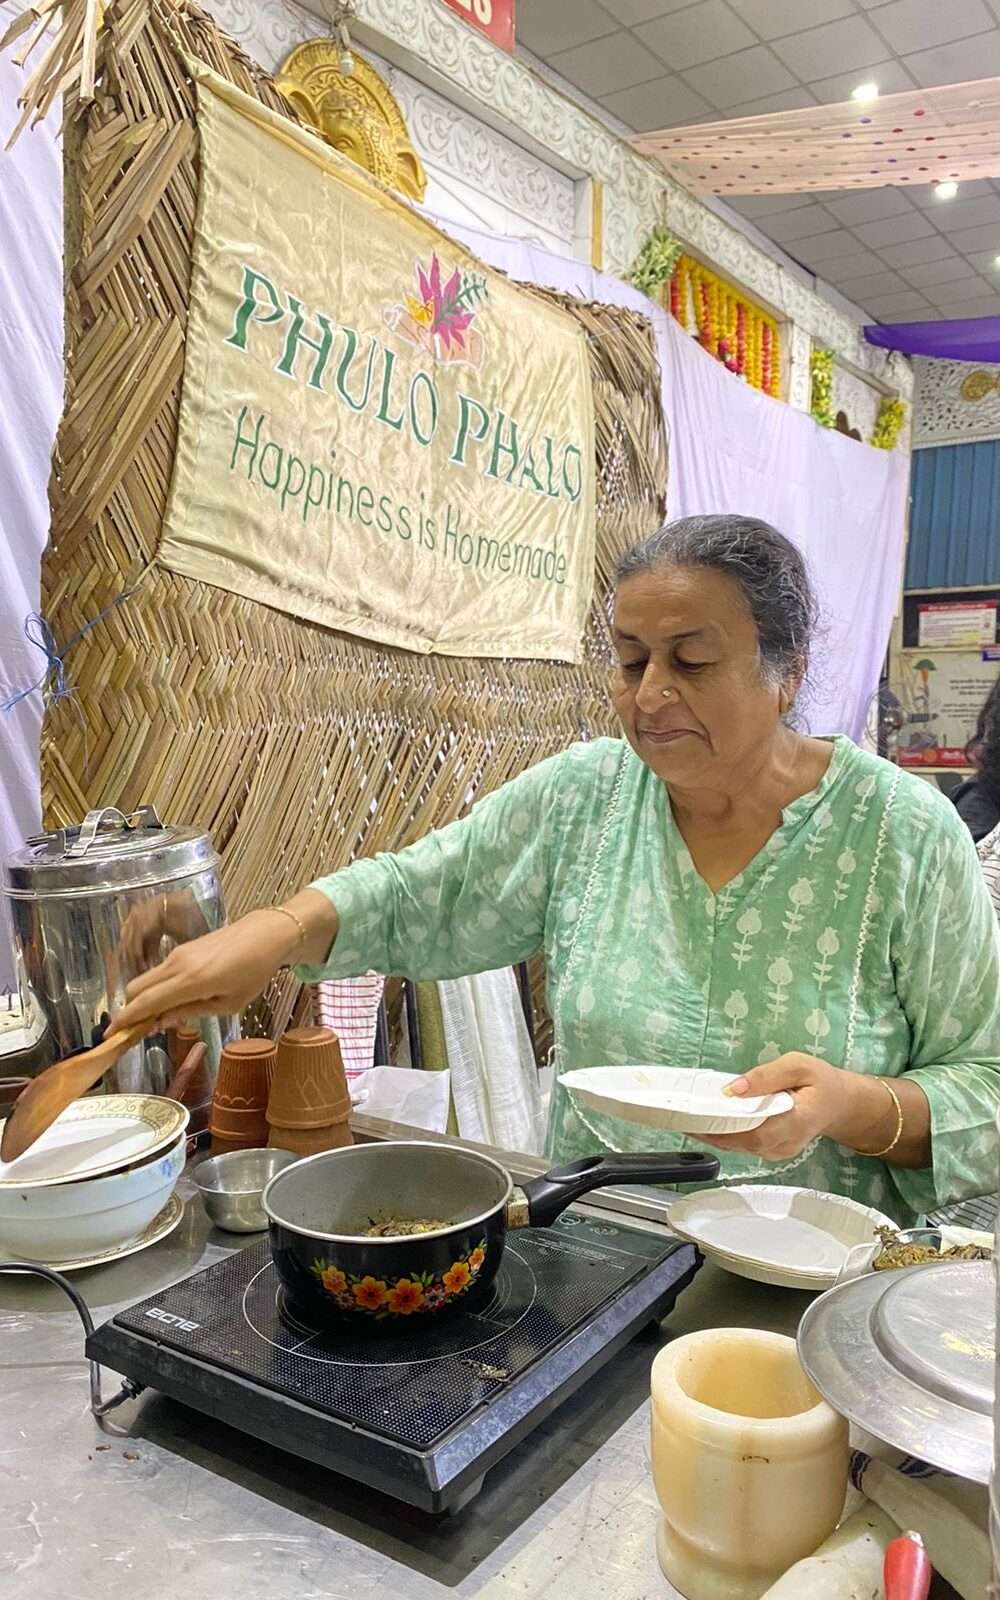 Inspiring woman entrepreneur - Madhu Ji making exotic items for Phulo Phalo